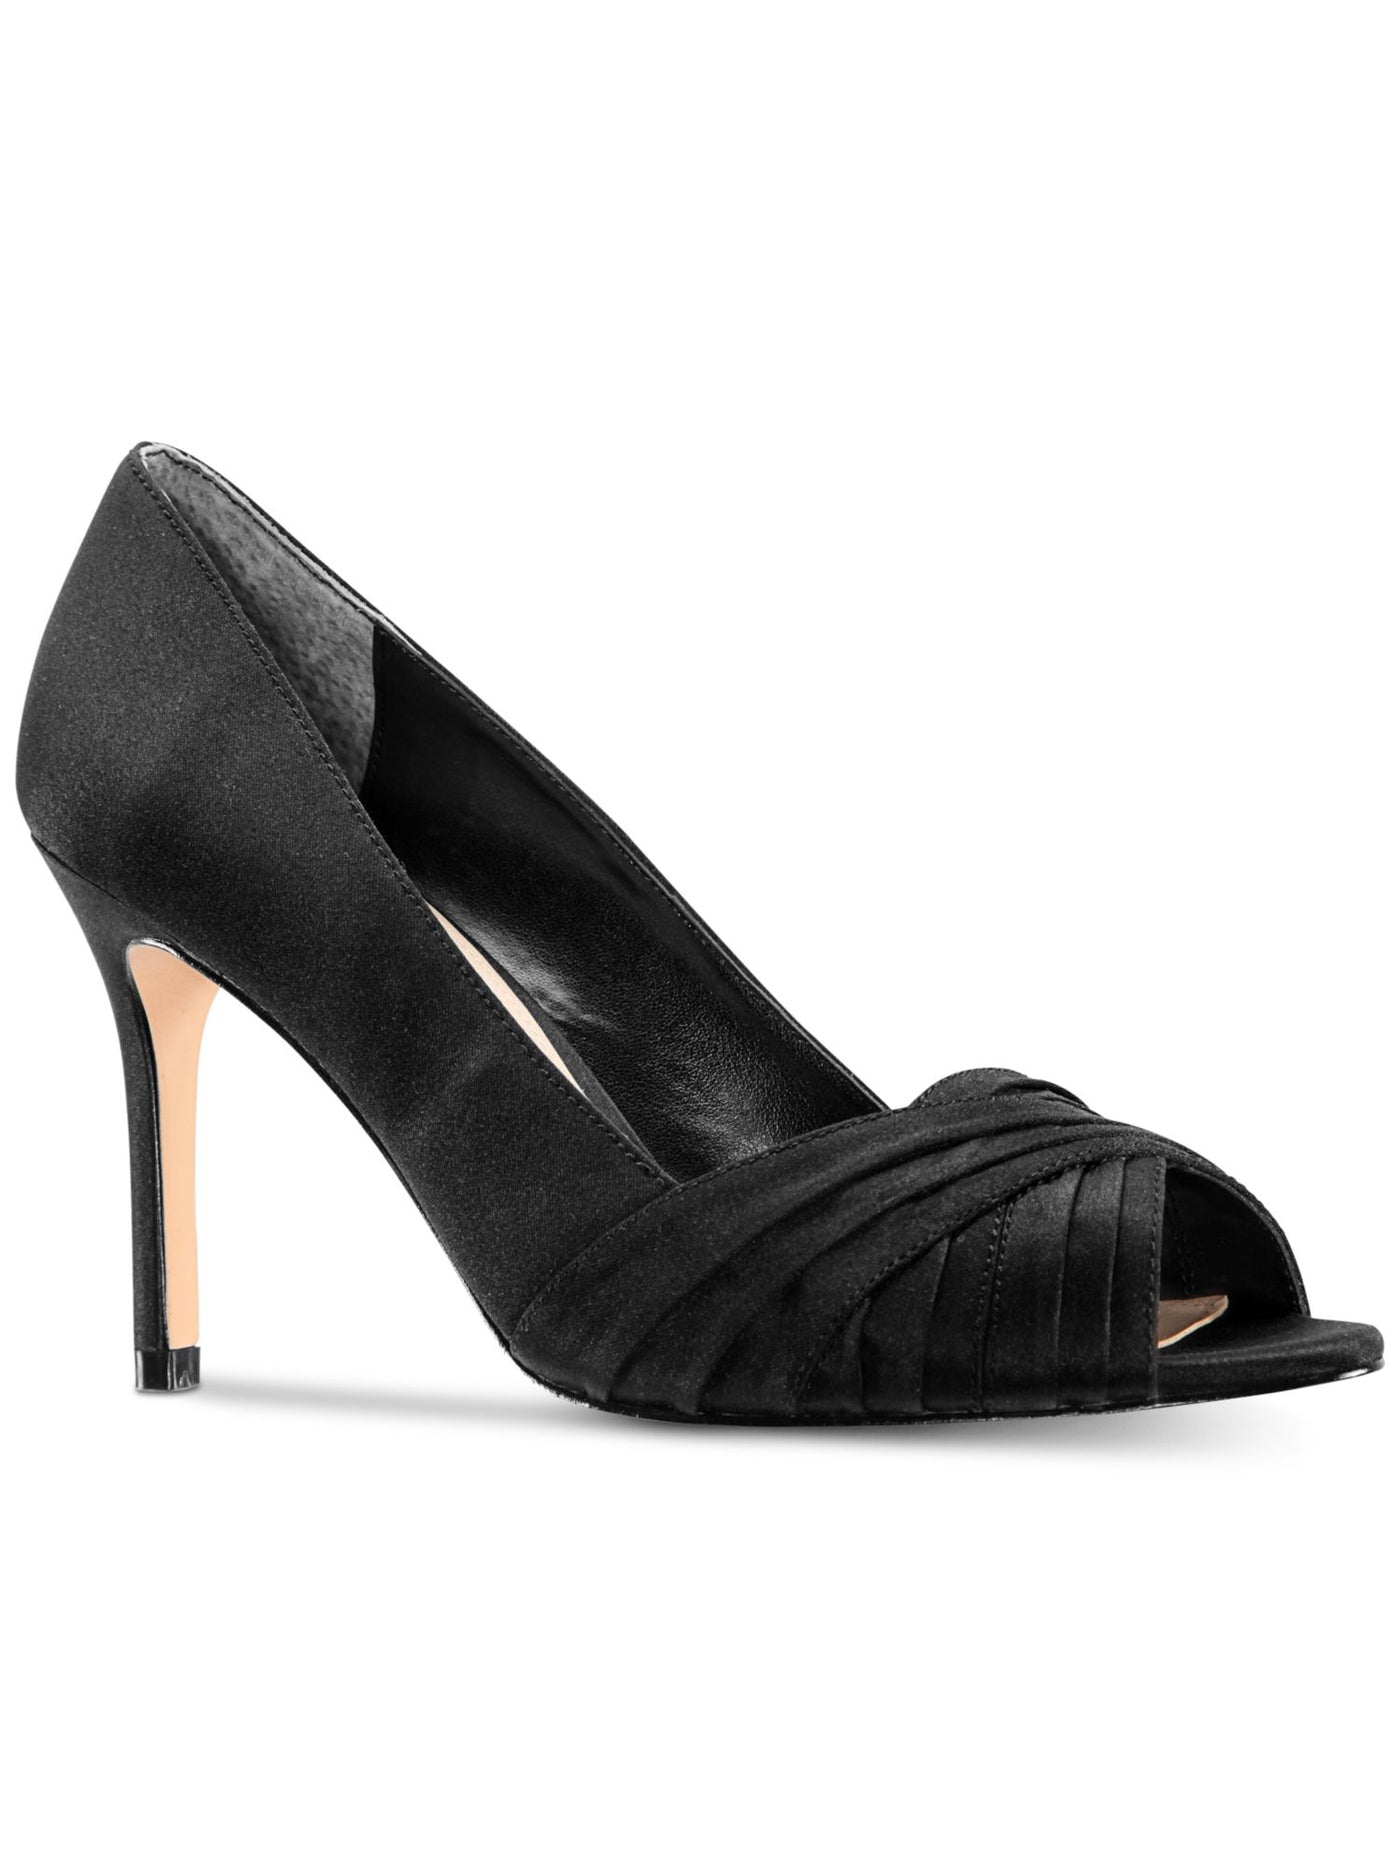 NINA Womens Black Crisscross Straps Padded Pleated Comfort Rhiyana Round Toe Stiletto Slip On Dress Pumps Shoes 8 M